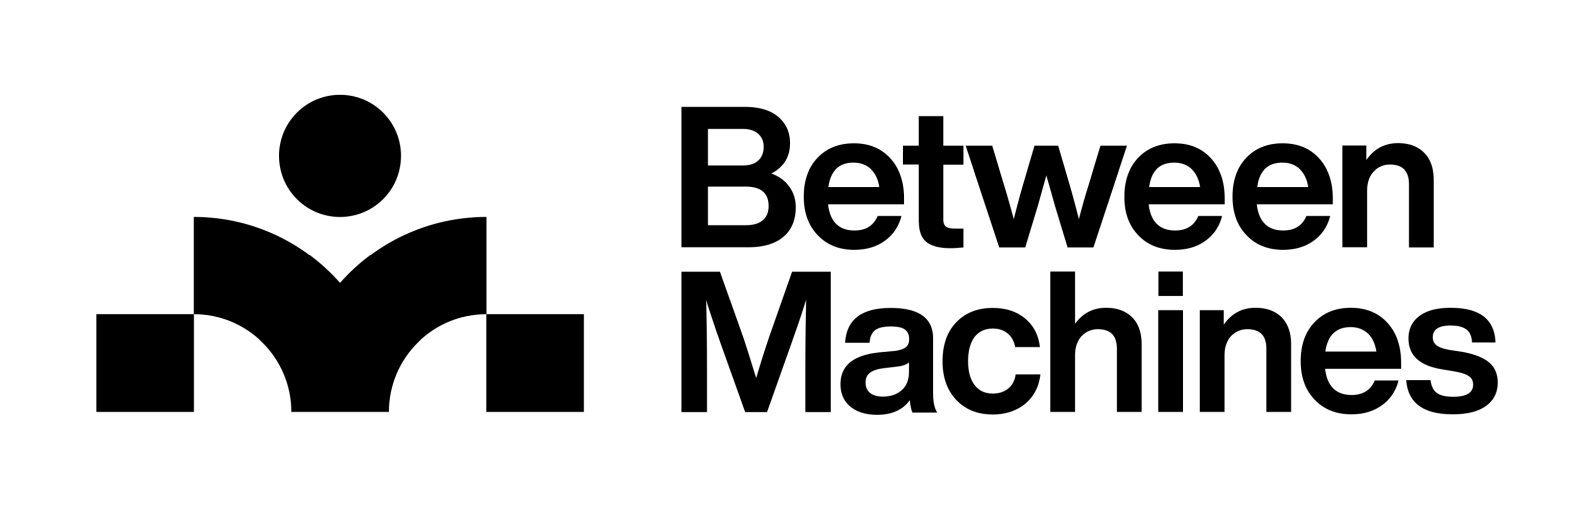 Between Machines Logo Lockup